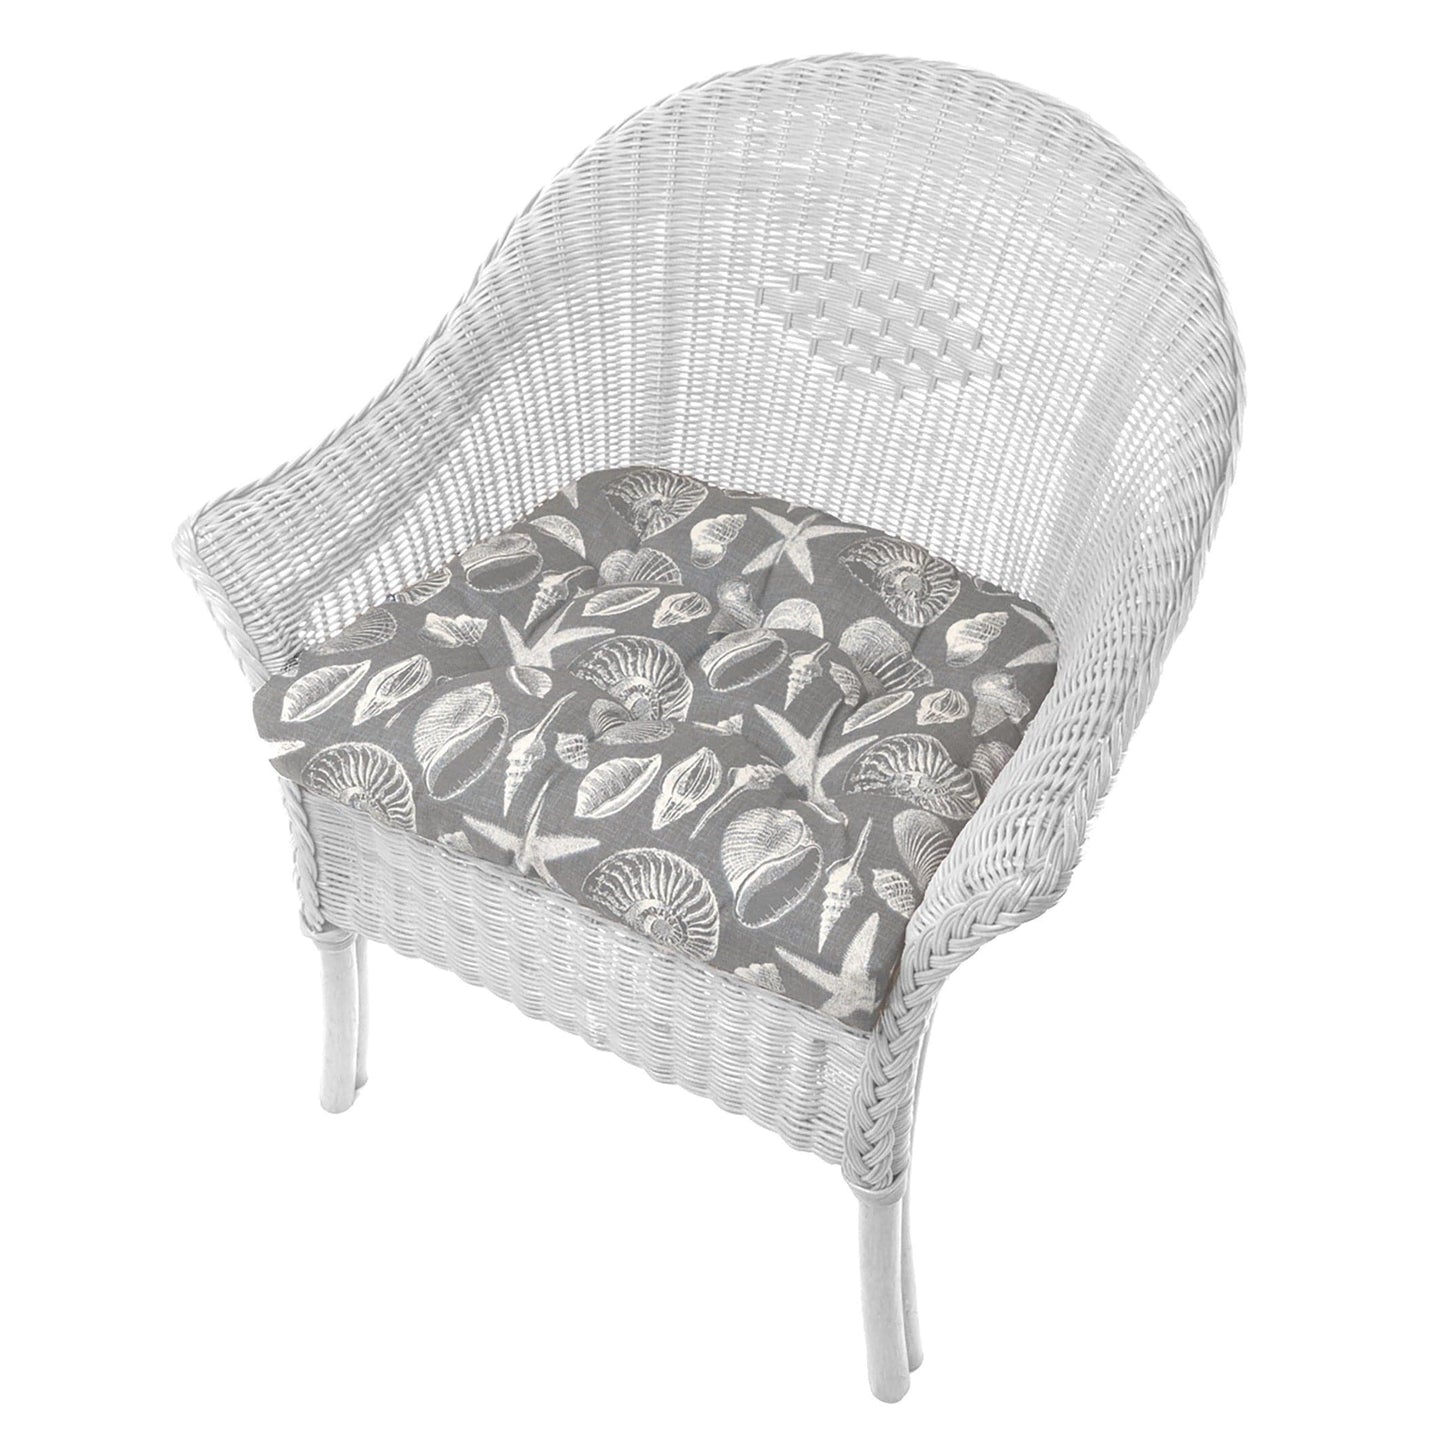 Shoreline Grey Patio Chair Cushions | Wicker Chair Cushions - Adirondack Chair Cushions | Barnett Home Decor | Grey & White | Aquatic | Oceanic | Coastal | Beach